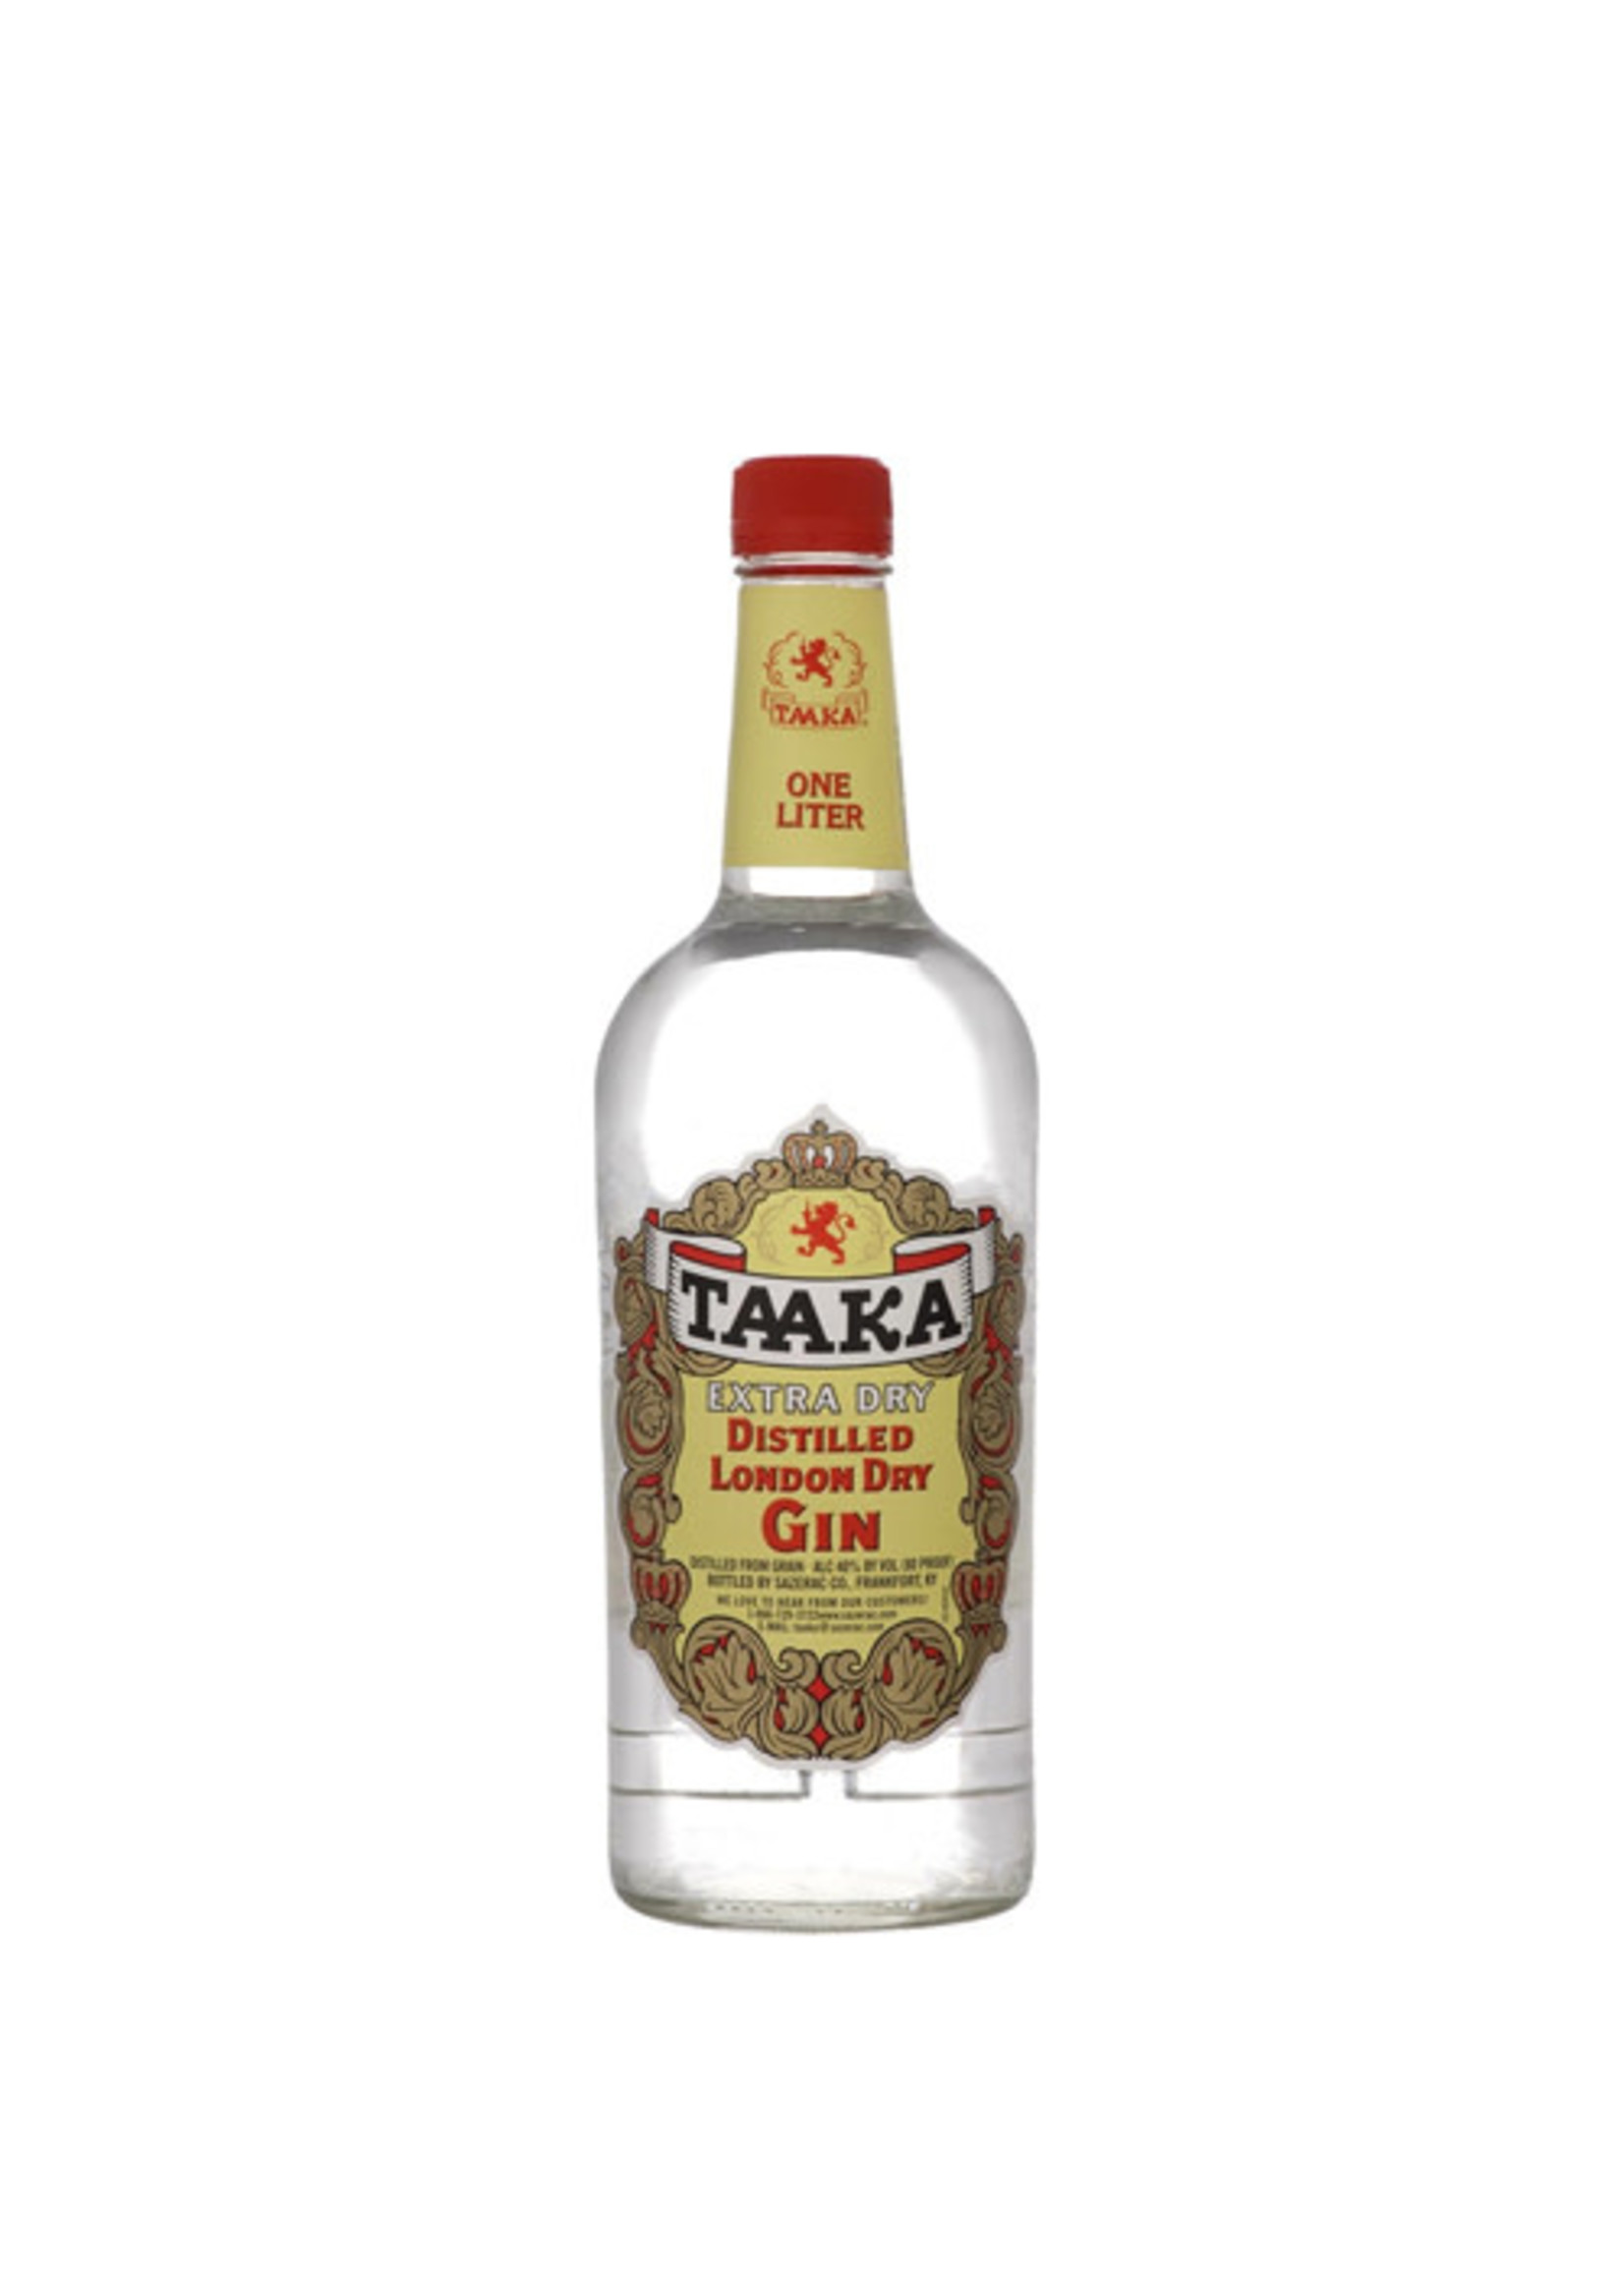 Taaka Gin 80Proof 1 Ltr